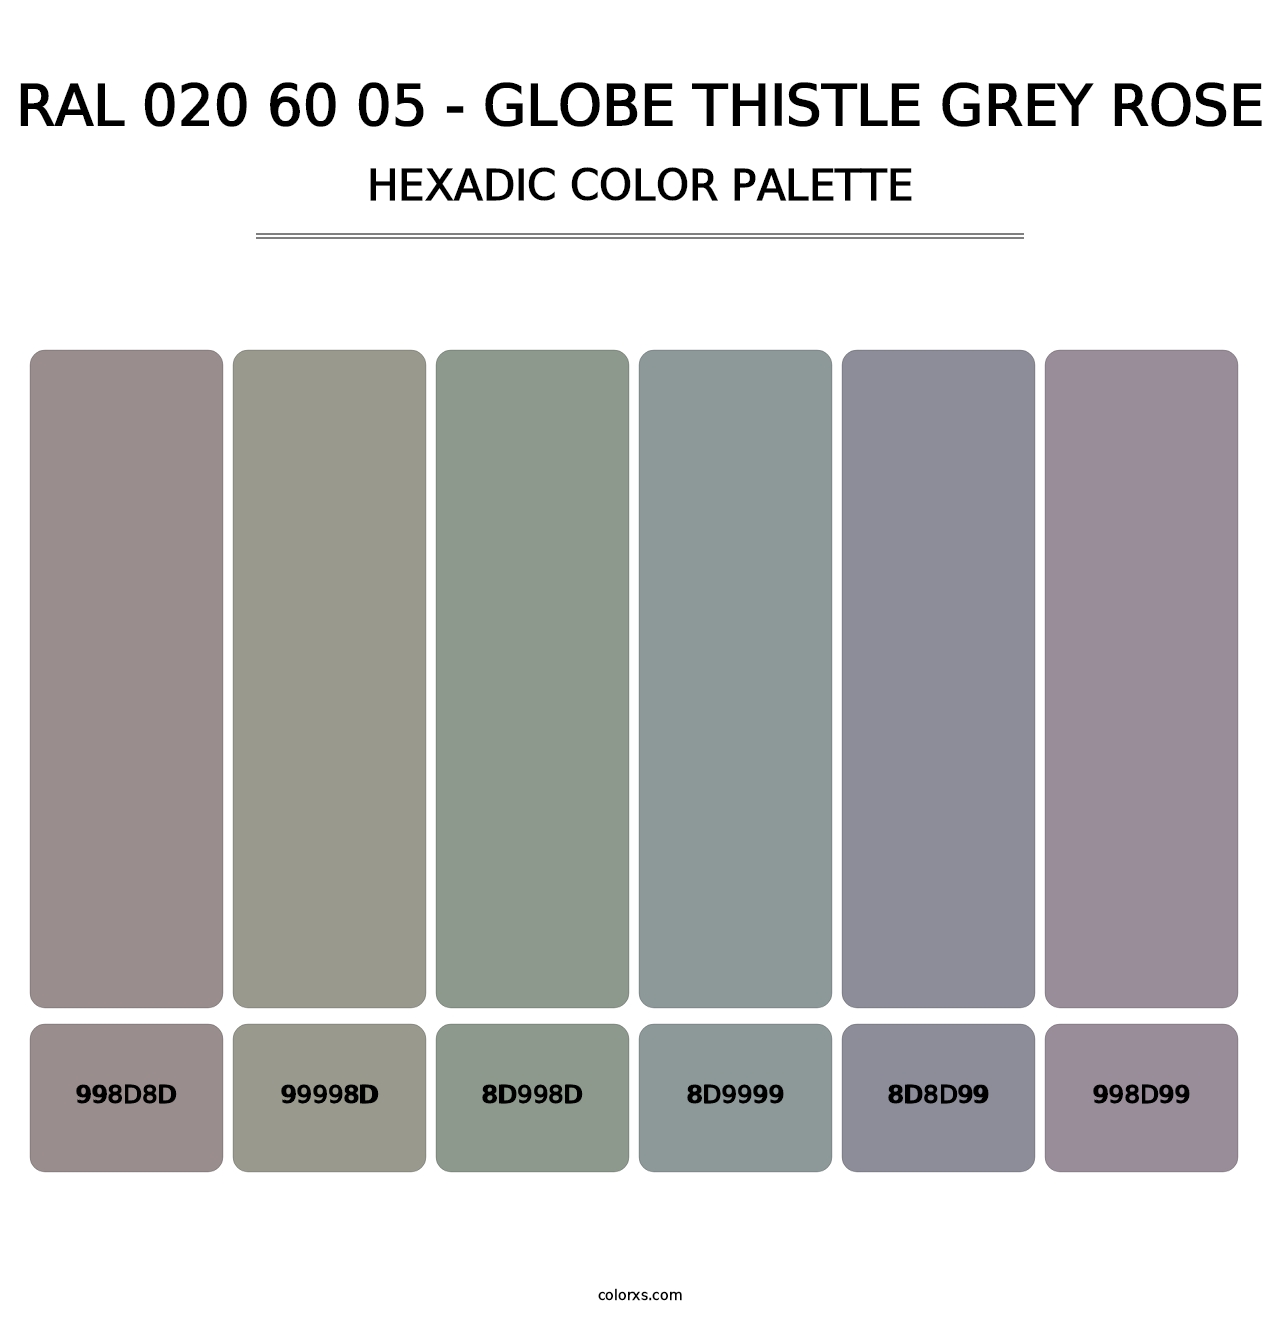 RAL 020 60 05 - Globe Thistle Grey Rose - Hexadic Color Palette